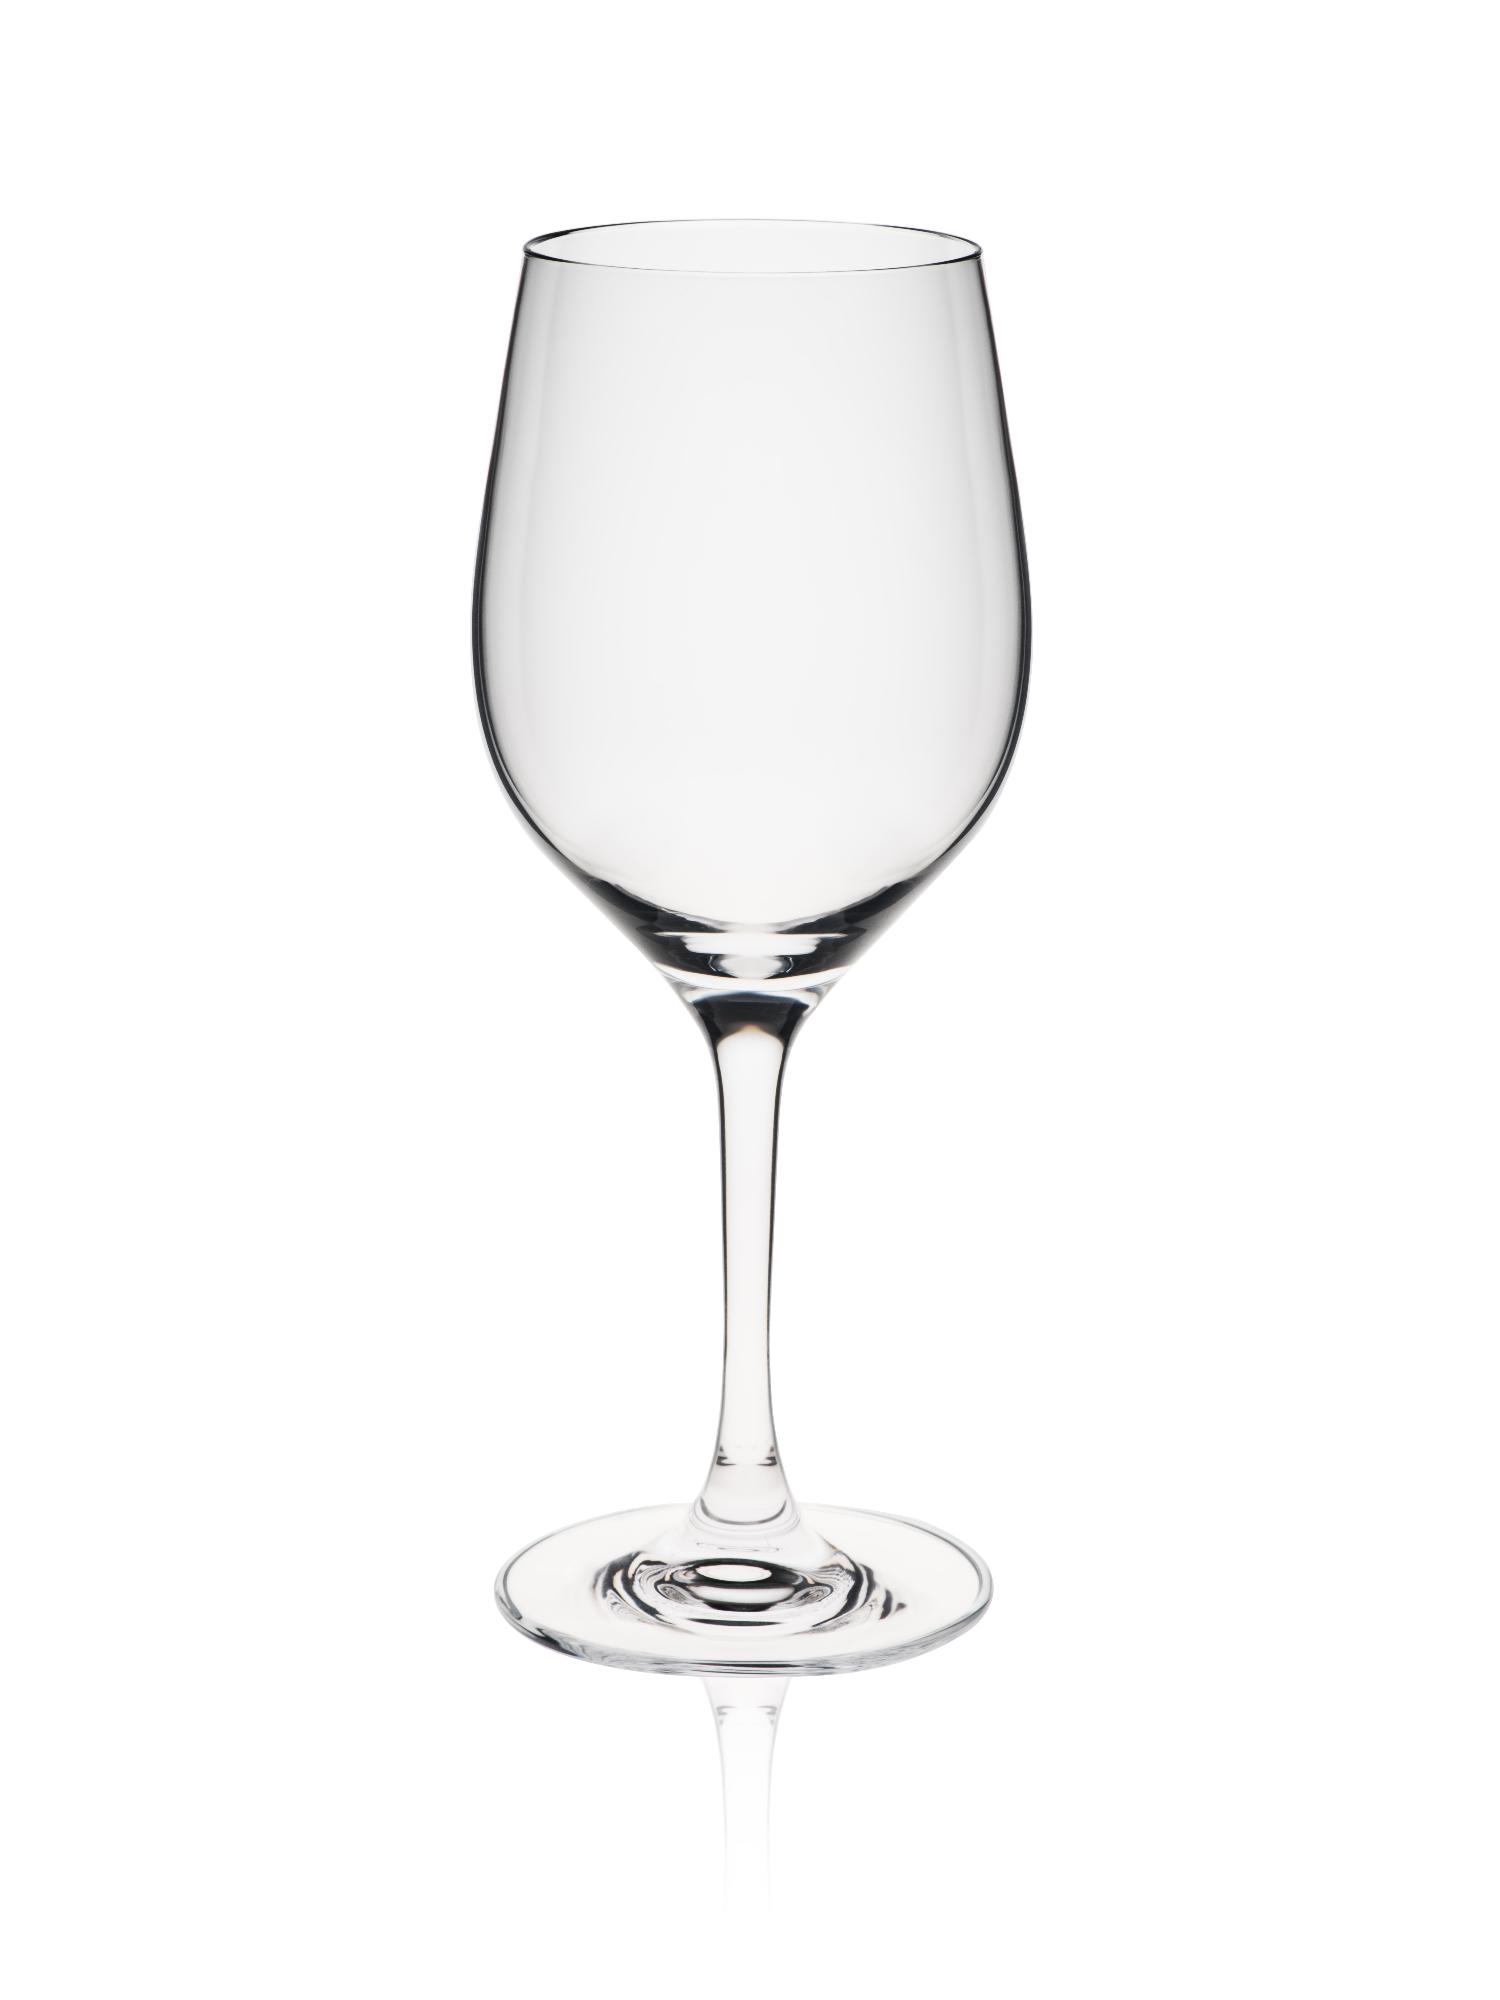 Edition wine glass, 360ml